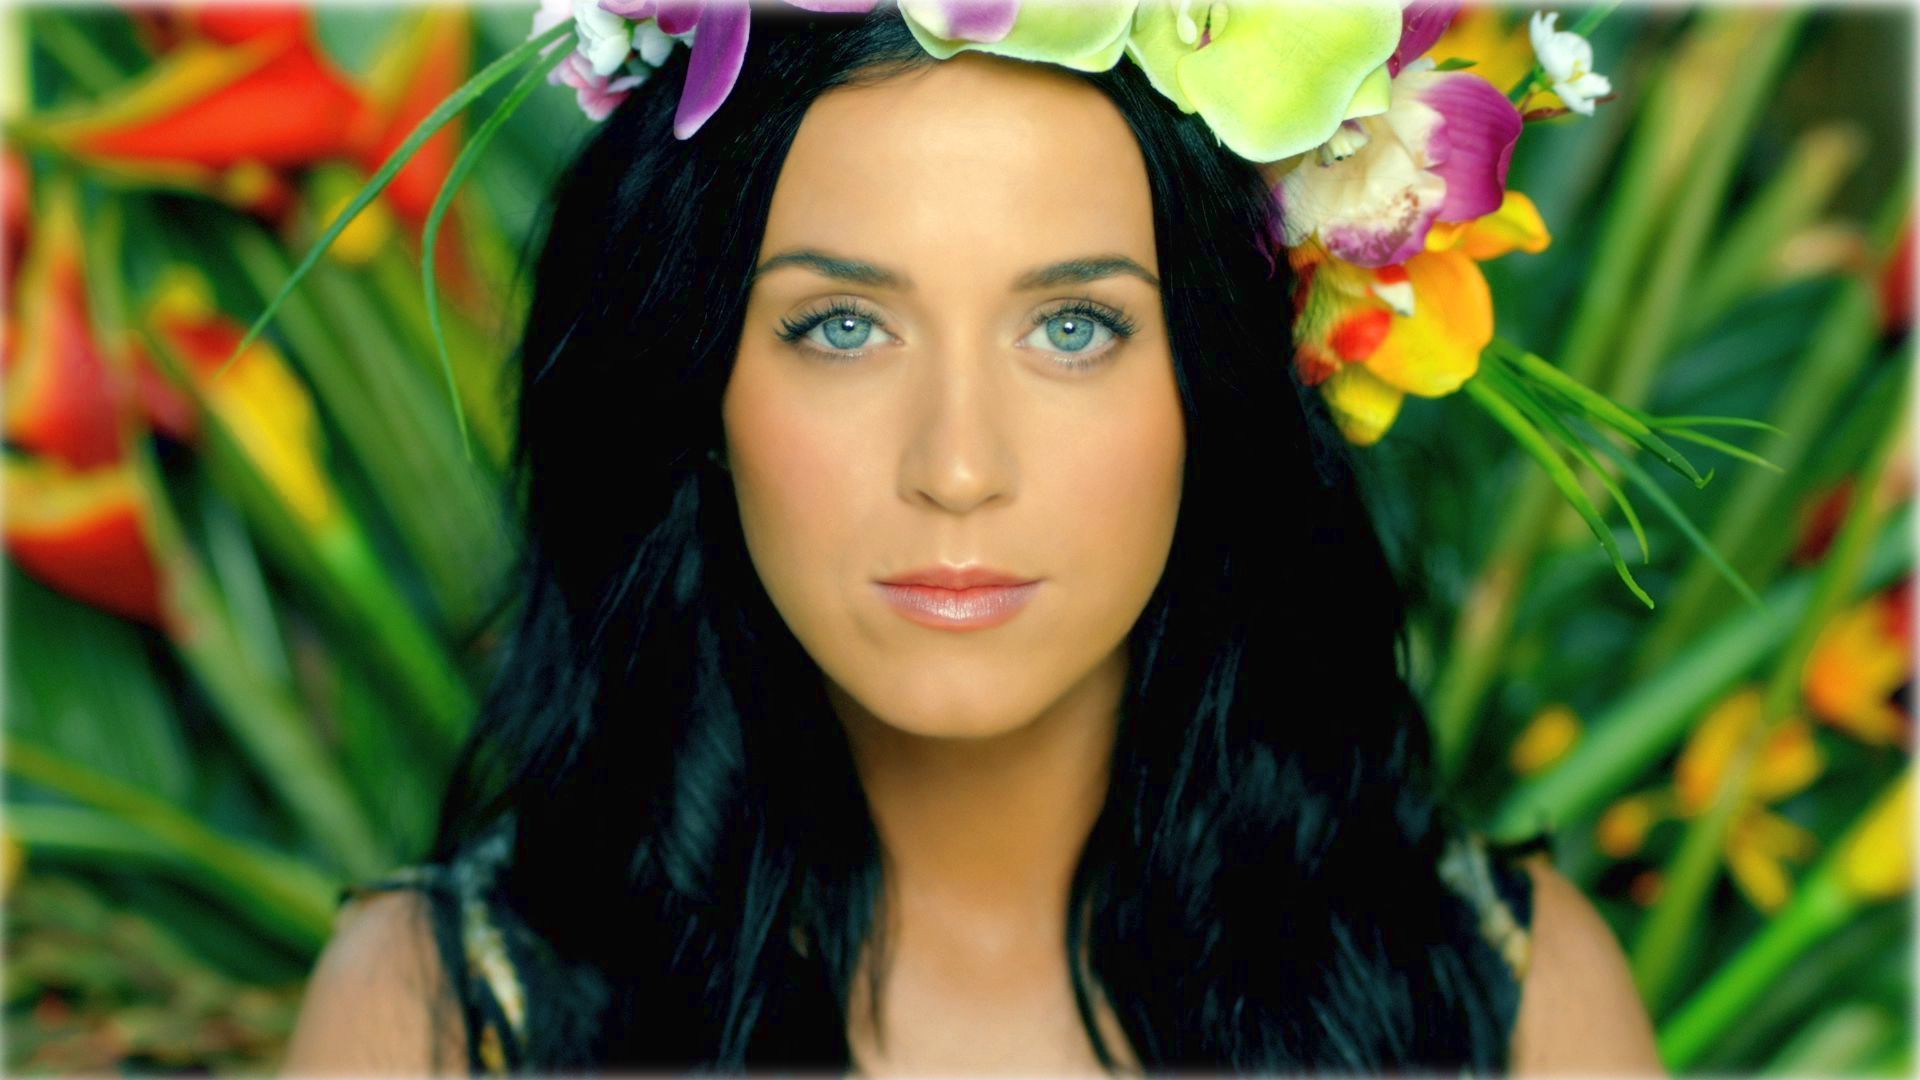 Katy Perry Roar Wallpaper Full HD. Katy perry roar, Katy perry, Katty perry